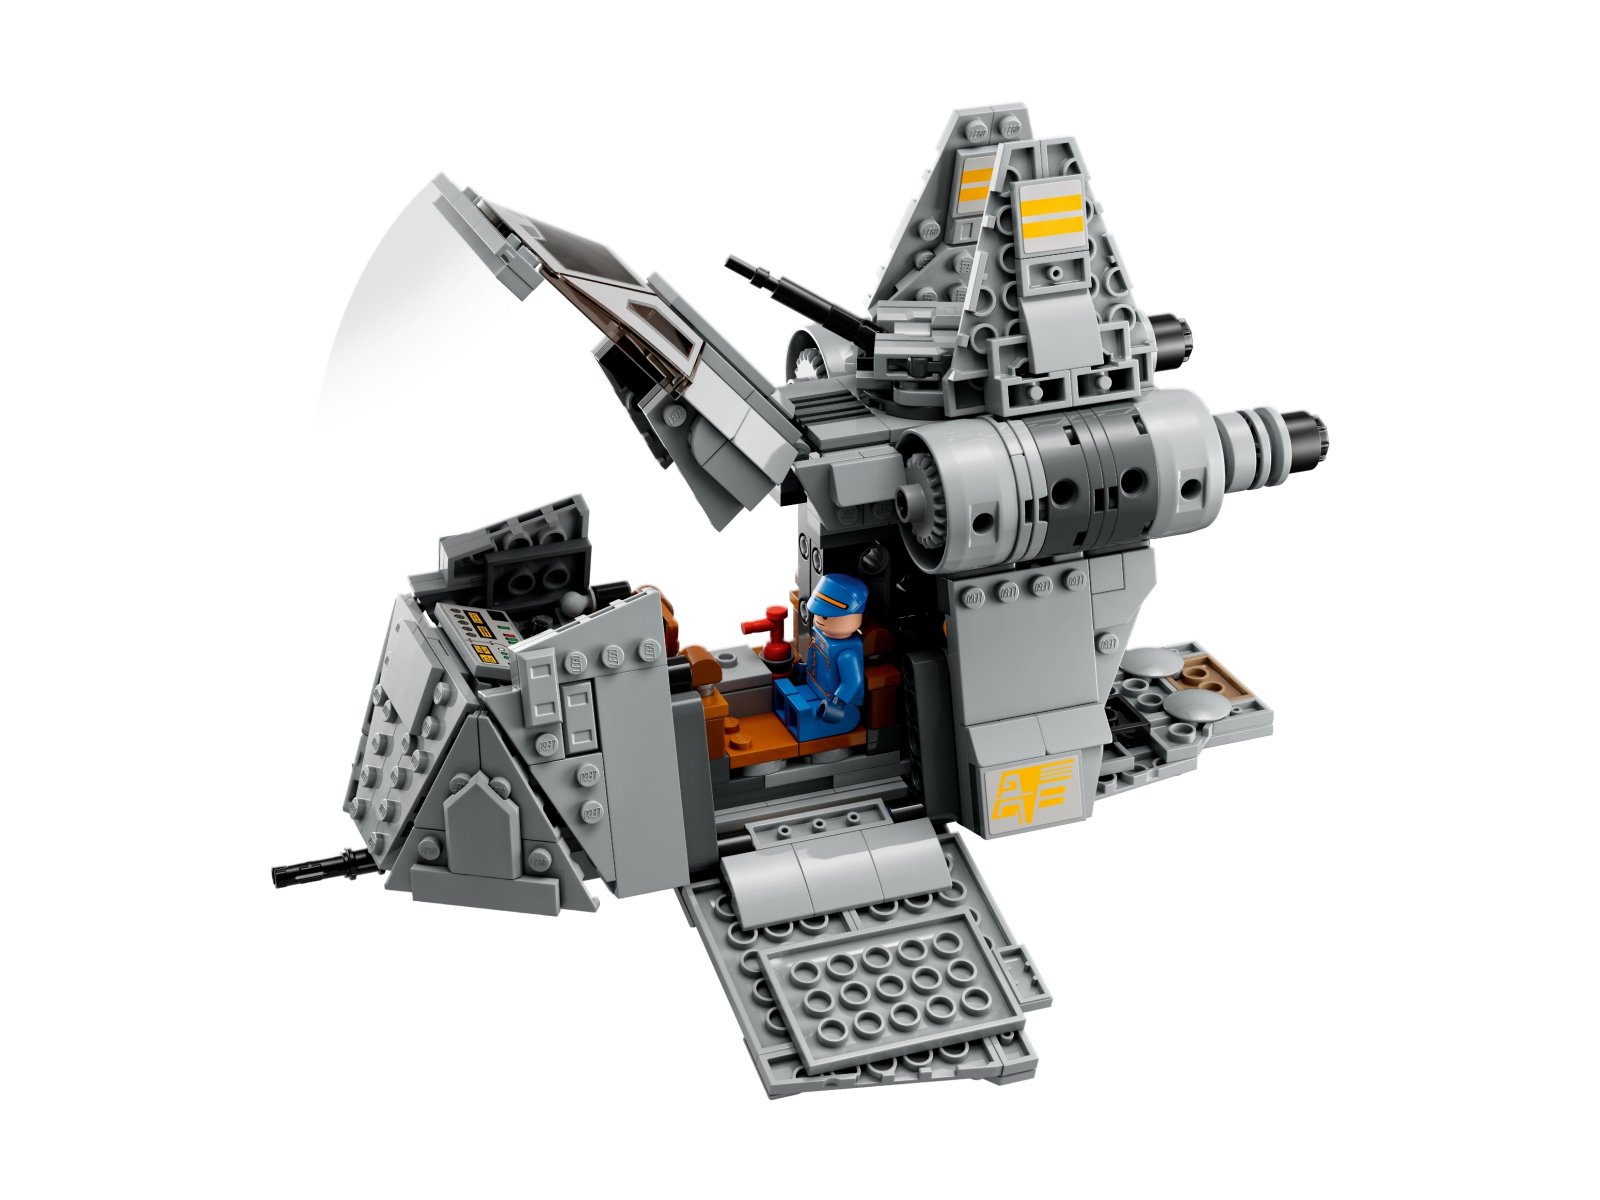 LEGO 75338 Star Wars Zasadzka na Ferrix™